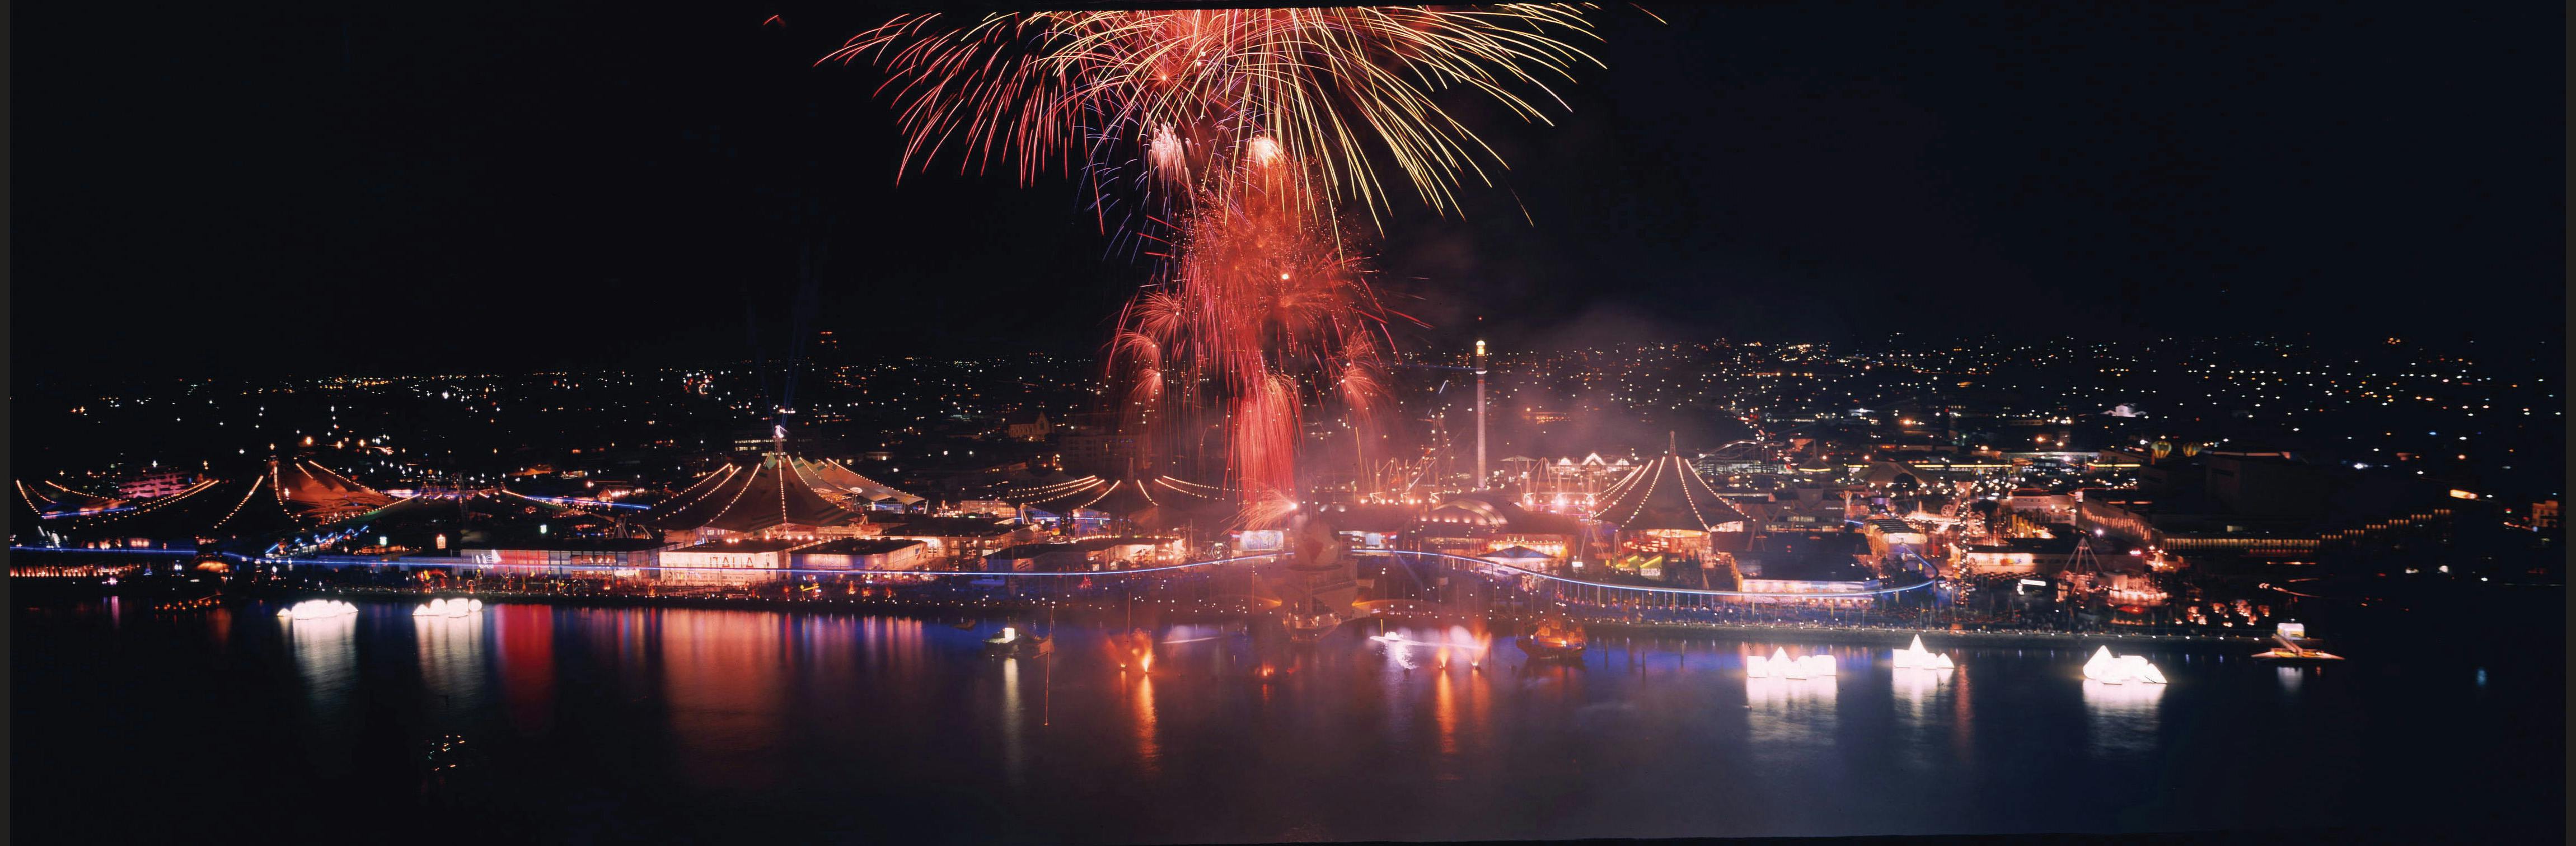 World Expo 88 - Panoramic fireworks